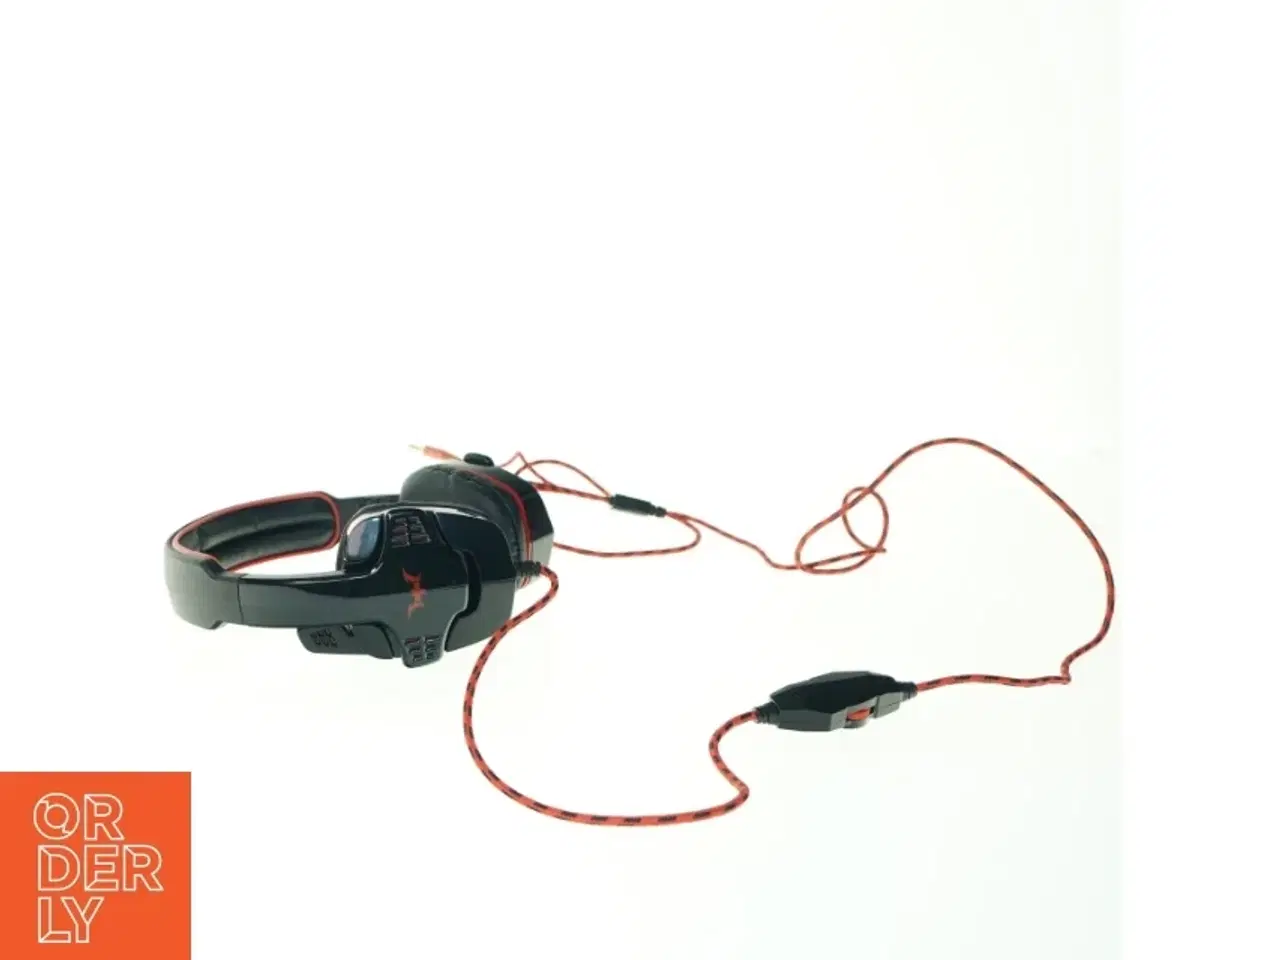 Billede 3 - Gaming headset fra Lcd (str. 20 x 8 x 21 cm)